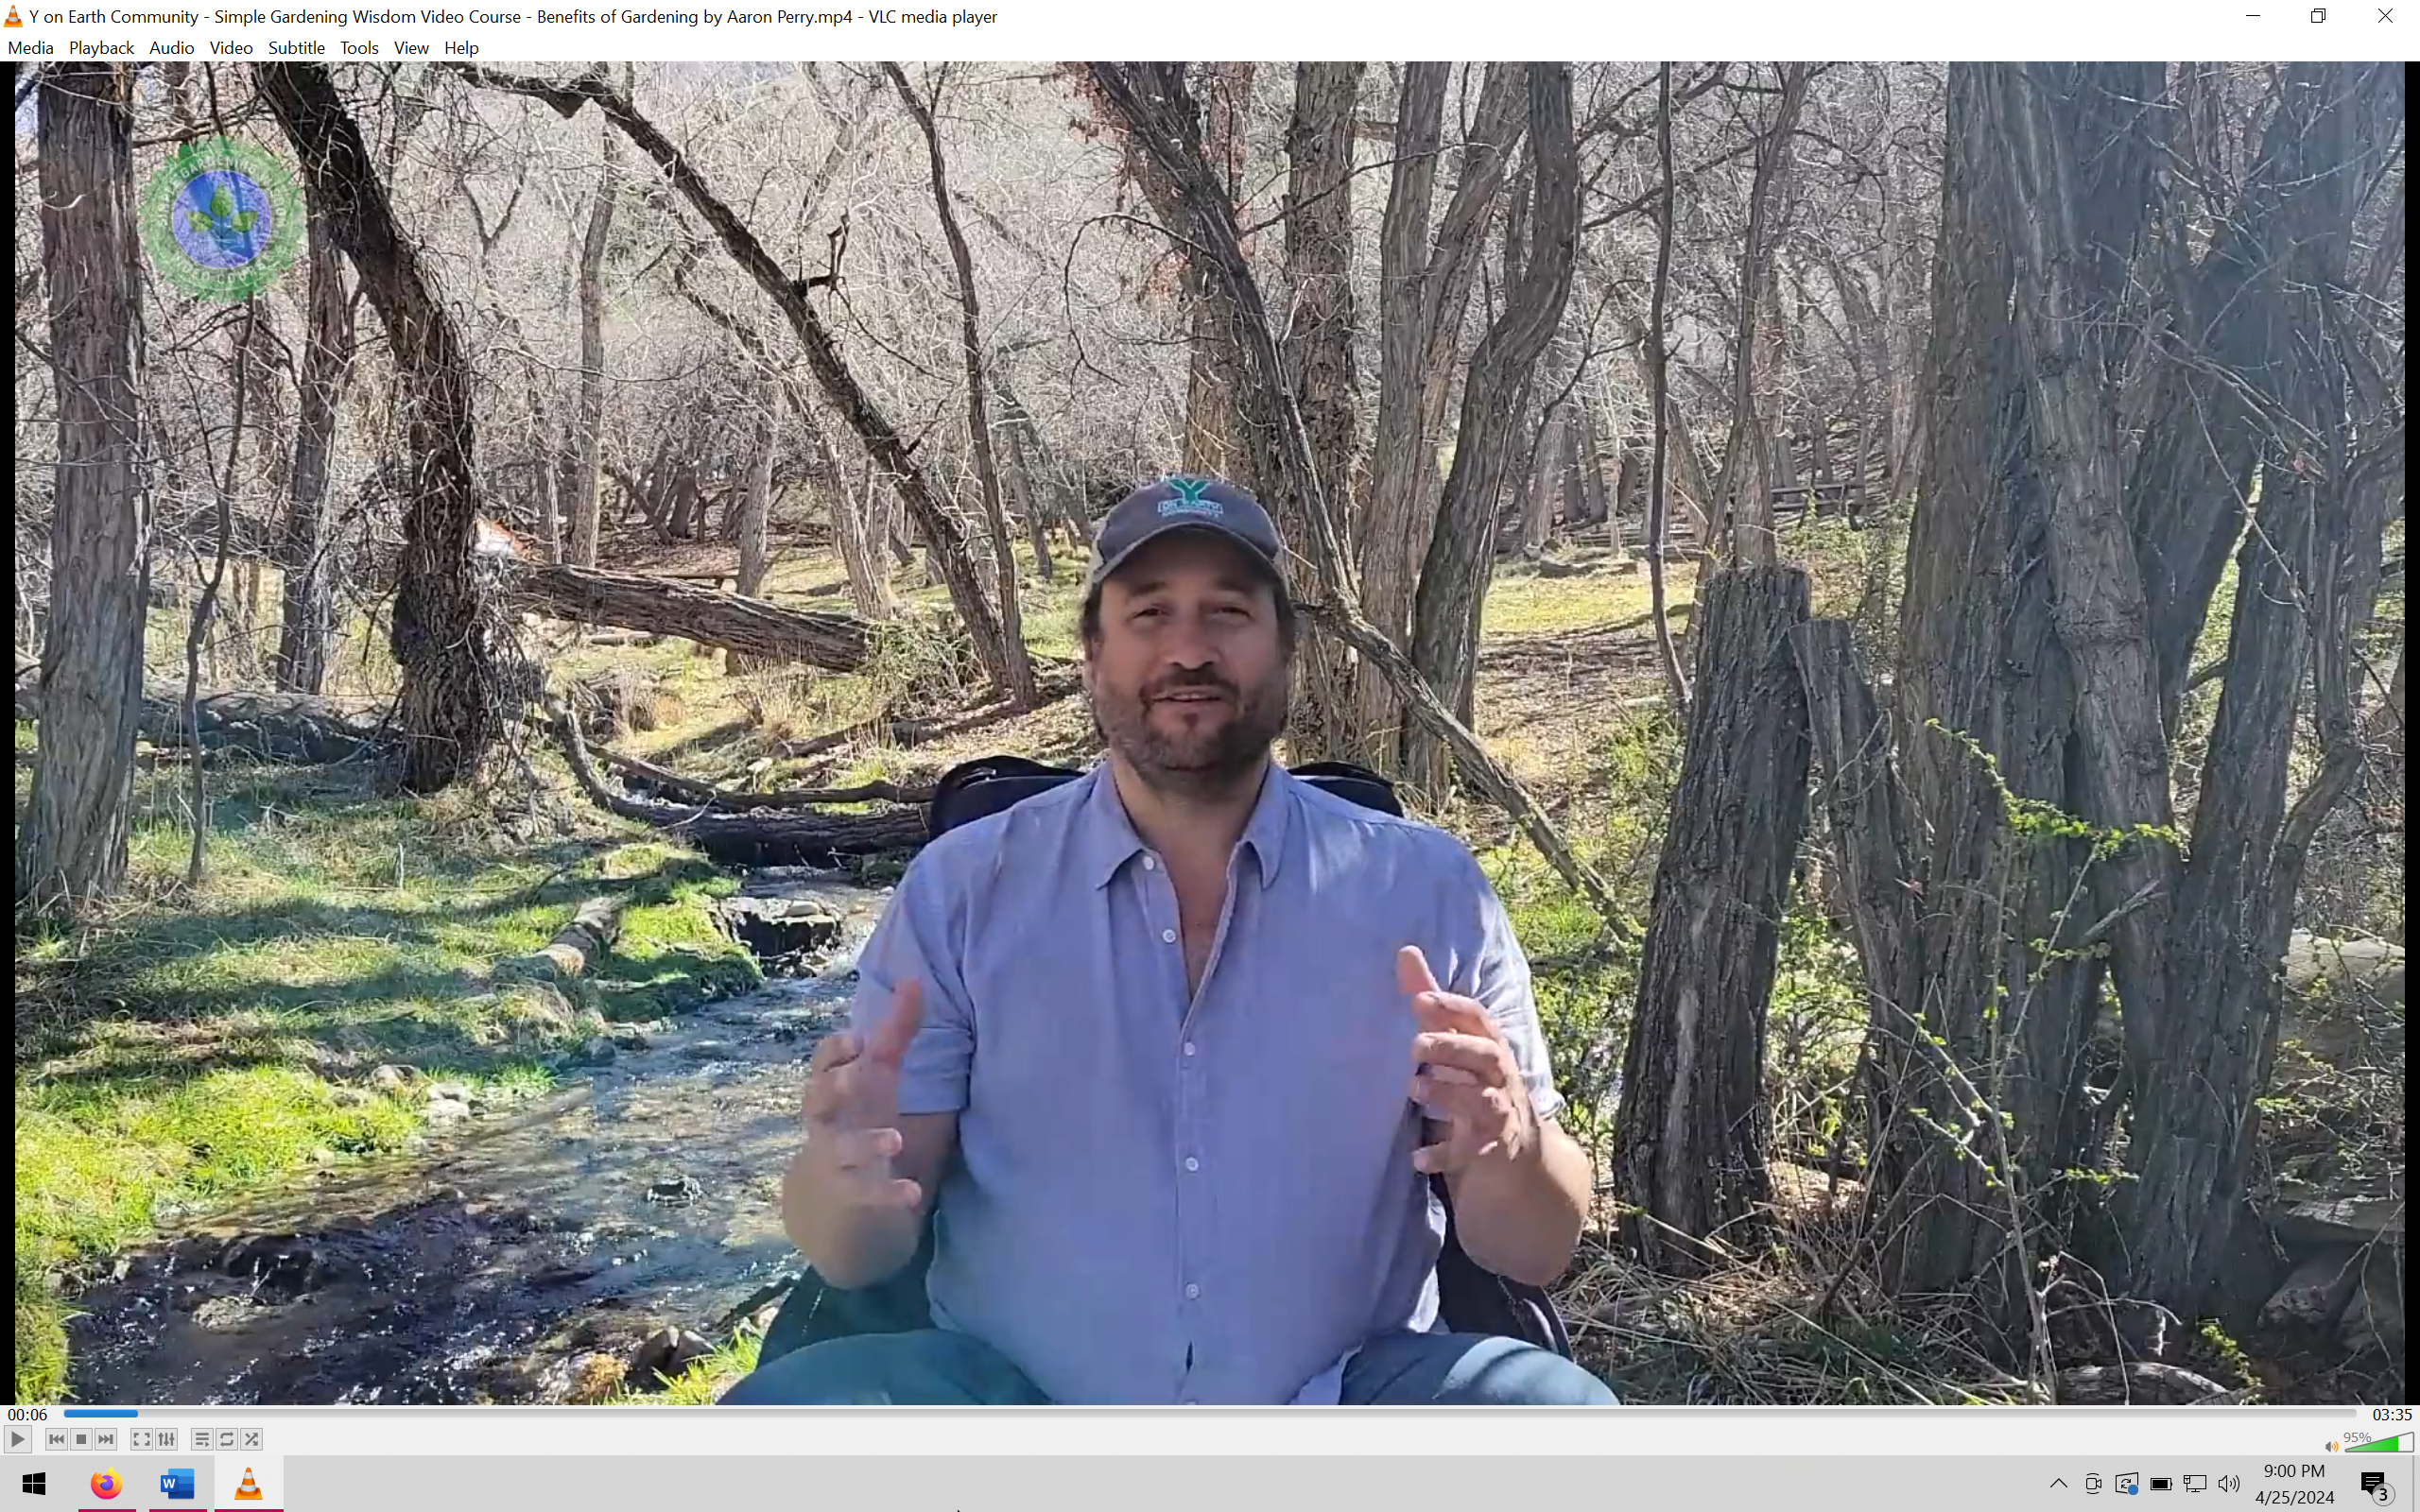 Aaron Perry Describes Benefits of Gardening for Simple Gardening Wisdom Video Course